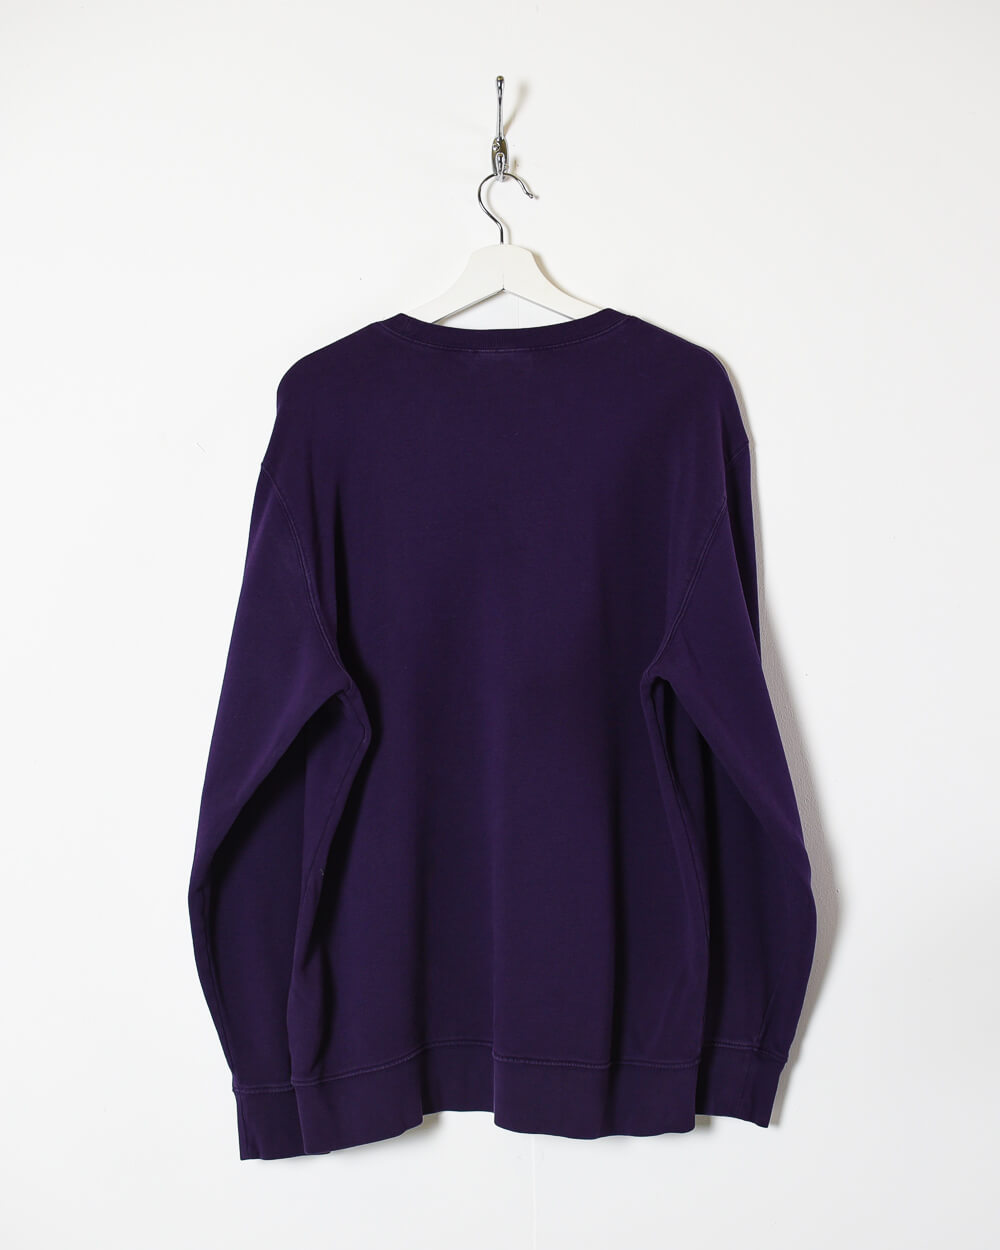 Purple Carhartt Sweatshirt - X-Large